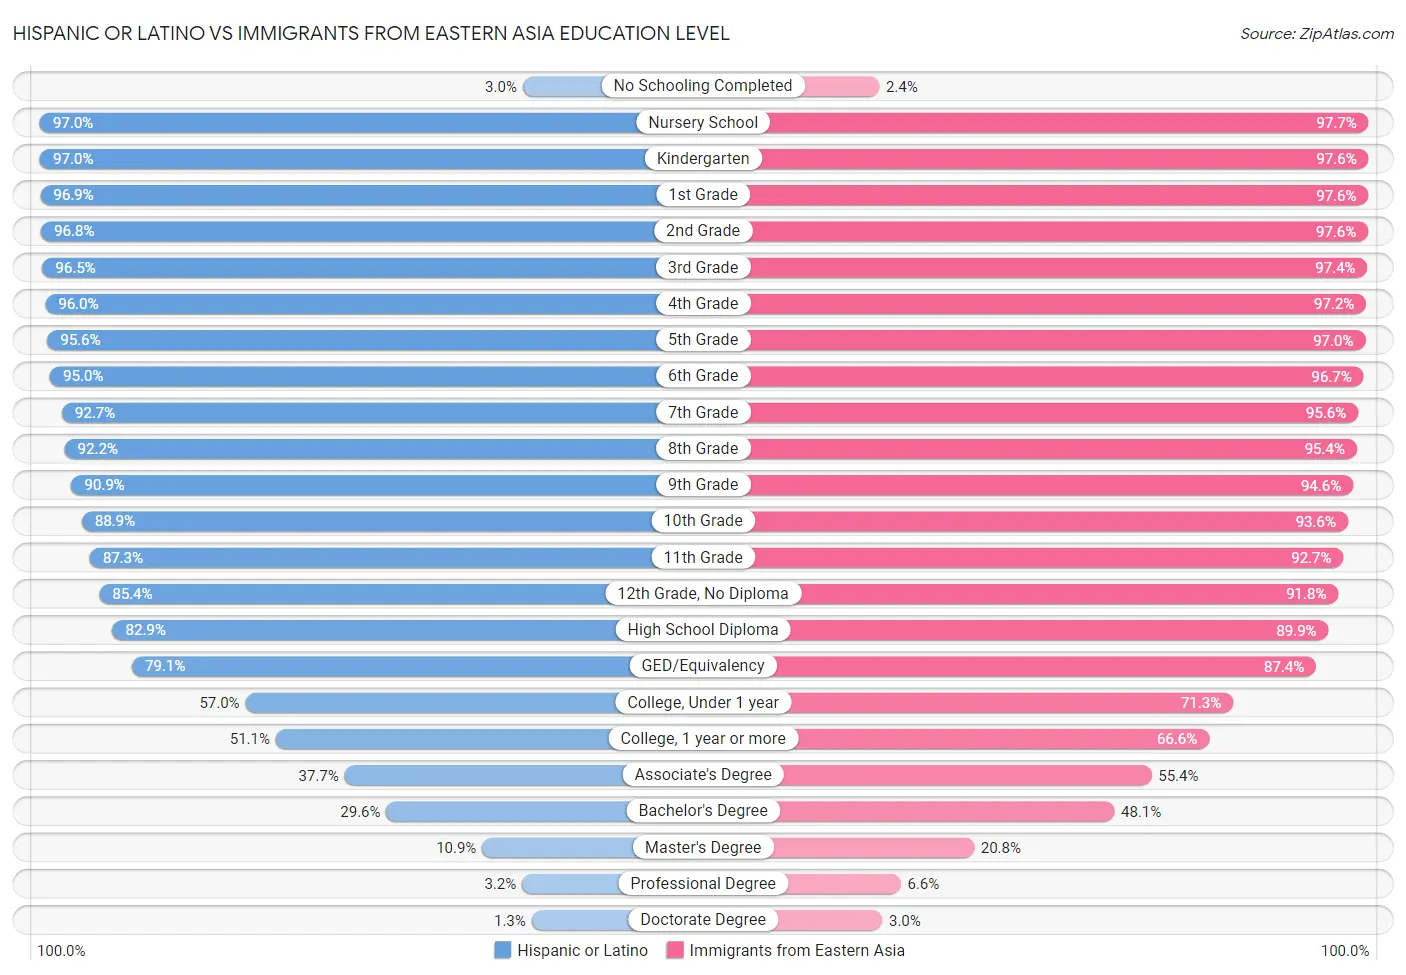 Hispanic or Latino vs Immigrants from Eastern Asia Education Level